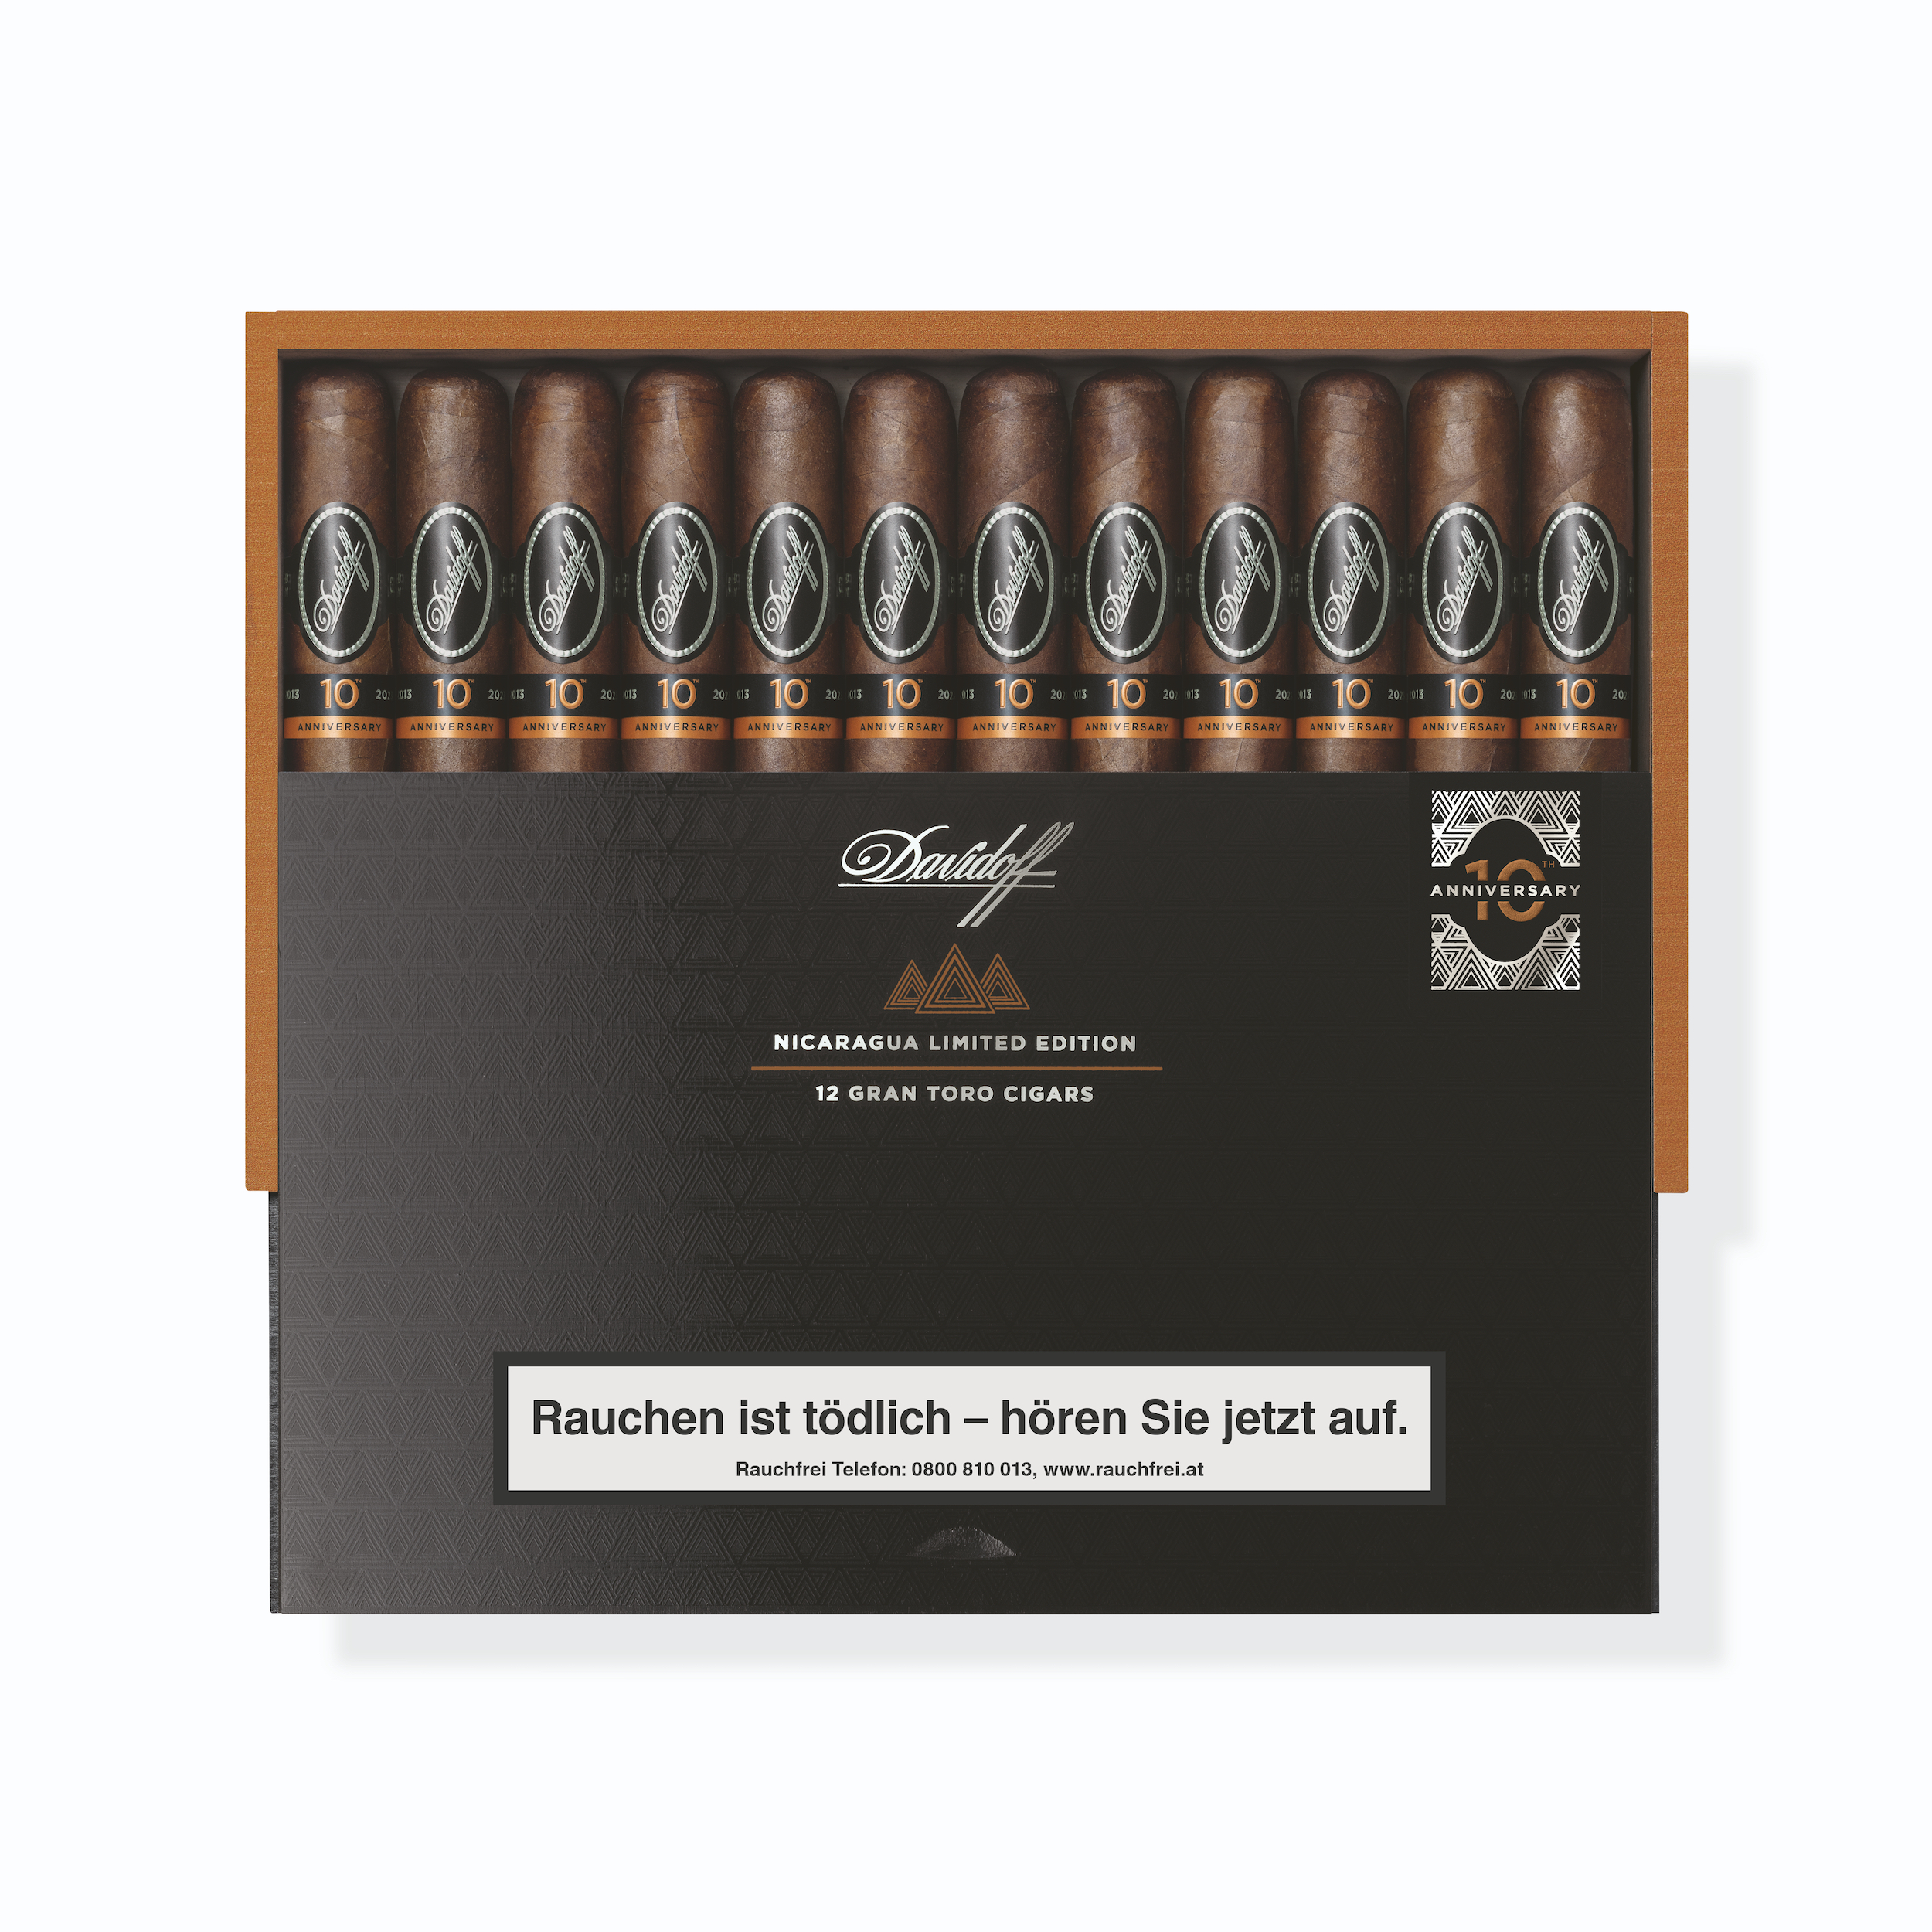 davidoff cigars nicaragua taste brand blend tobacco limited edtion